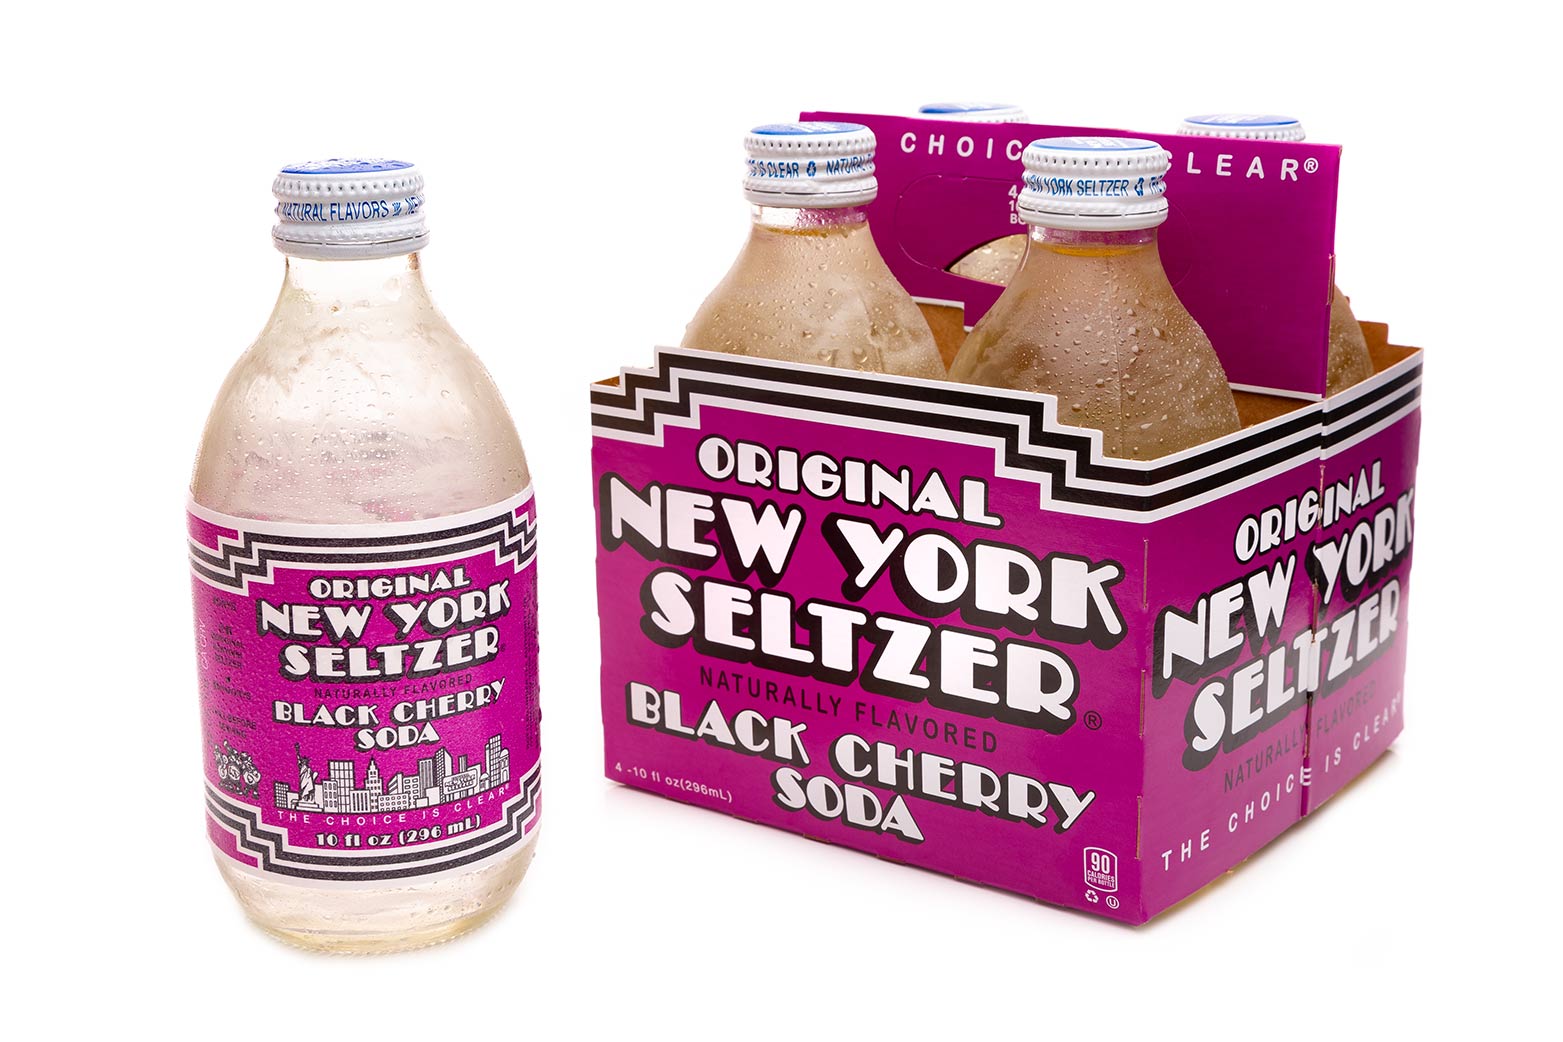 Original New York Seltzer Black Cherry 4-pack carrier with bottle